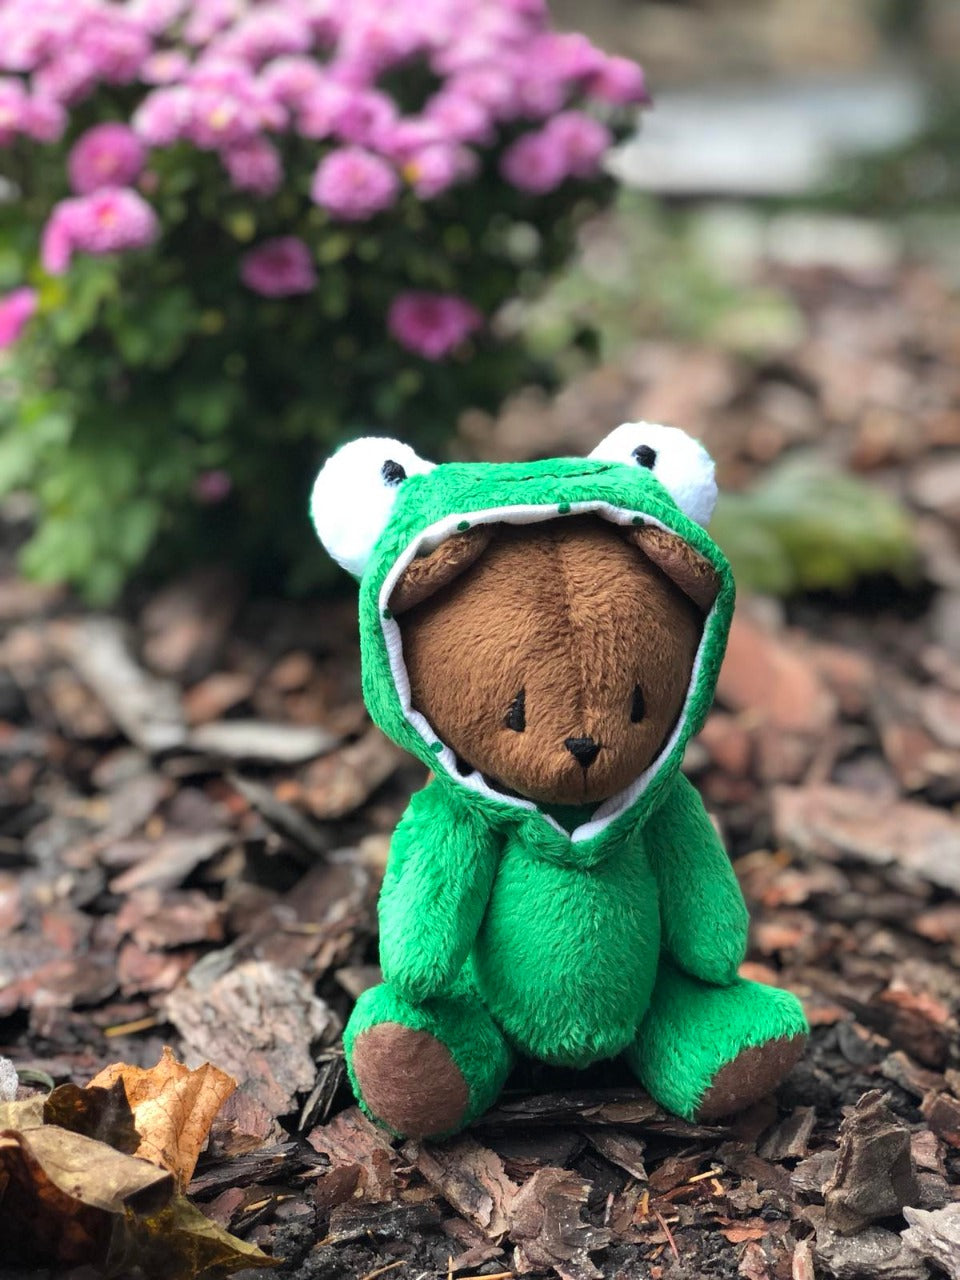 Teddy bear in frog costume